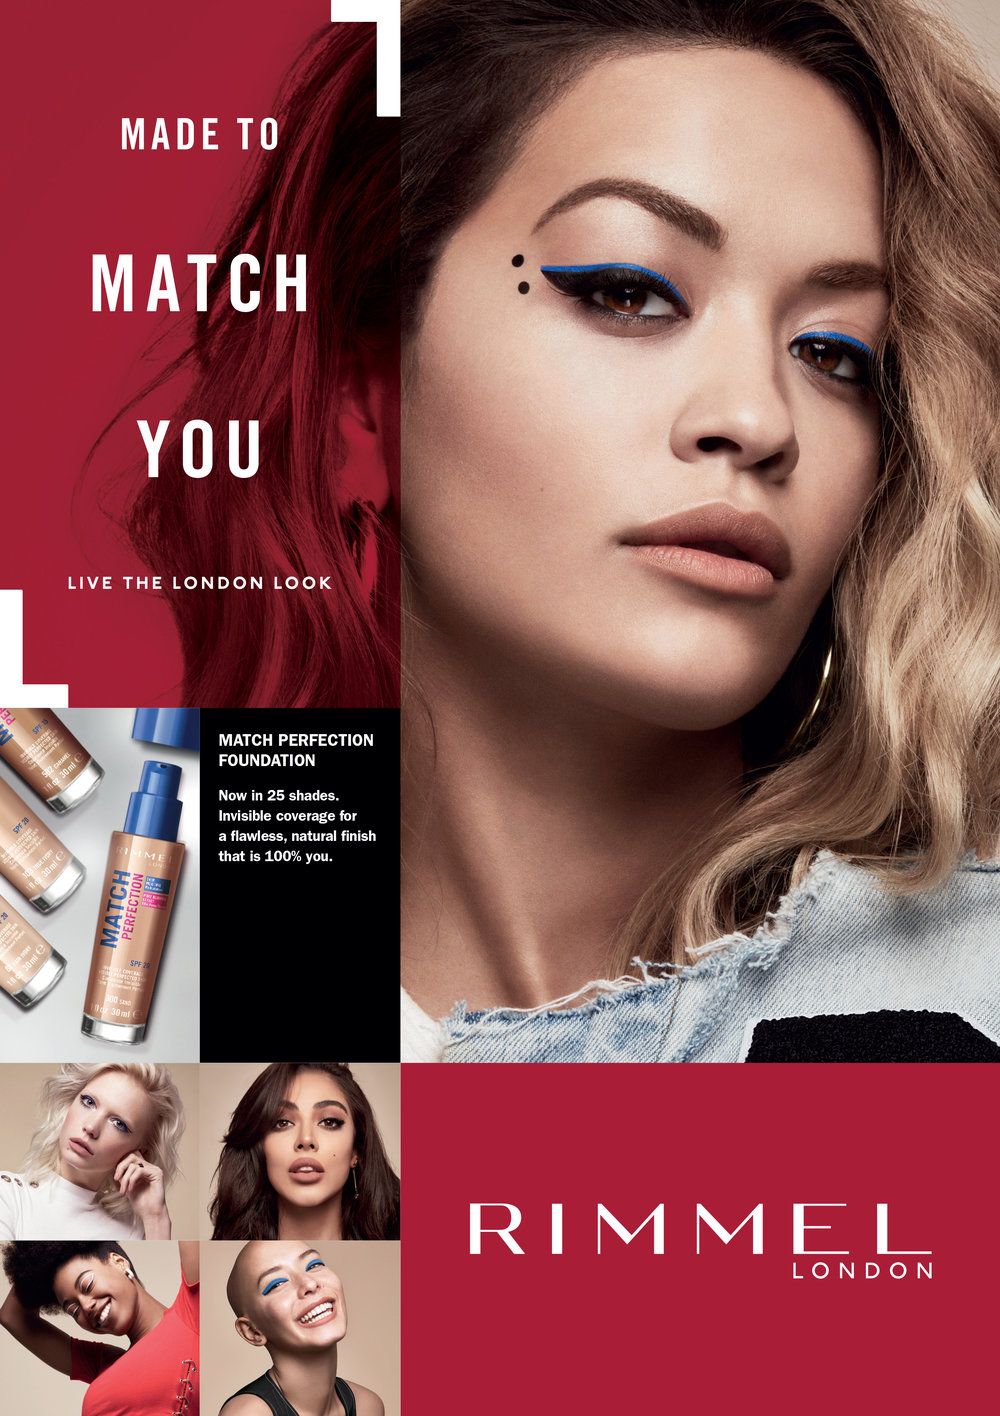 Doorbraak Onderling verbinden dynamisch Rimmel LDN x Rita Ora 'Match You' — Ciara O'Meara